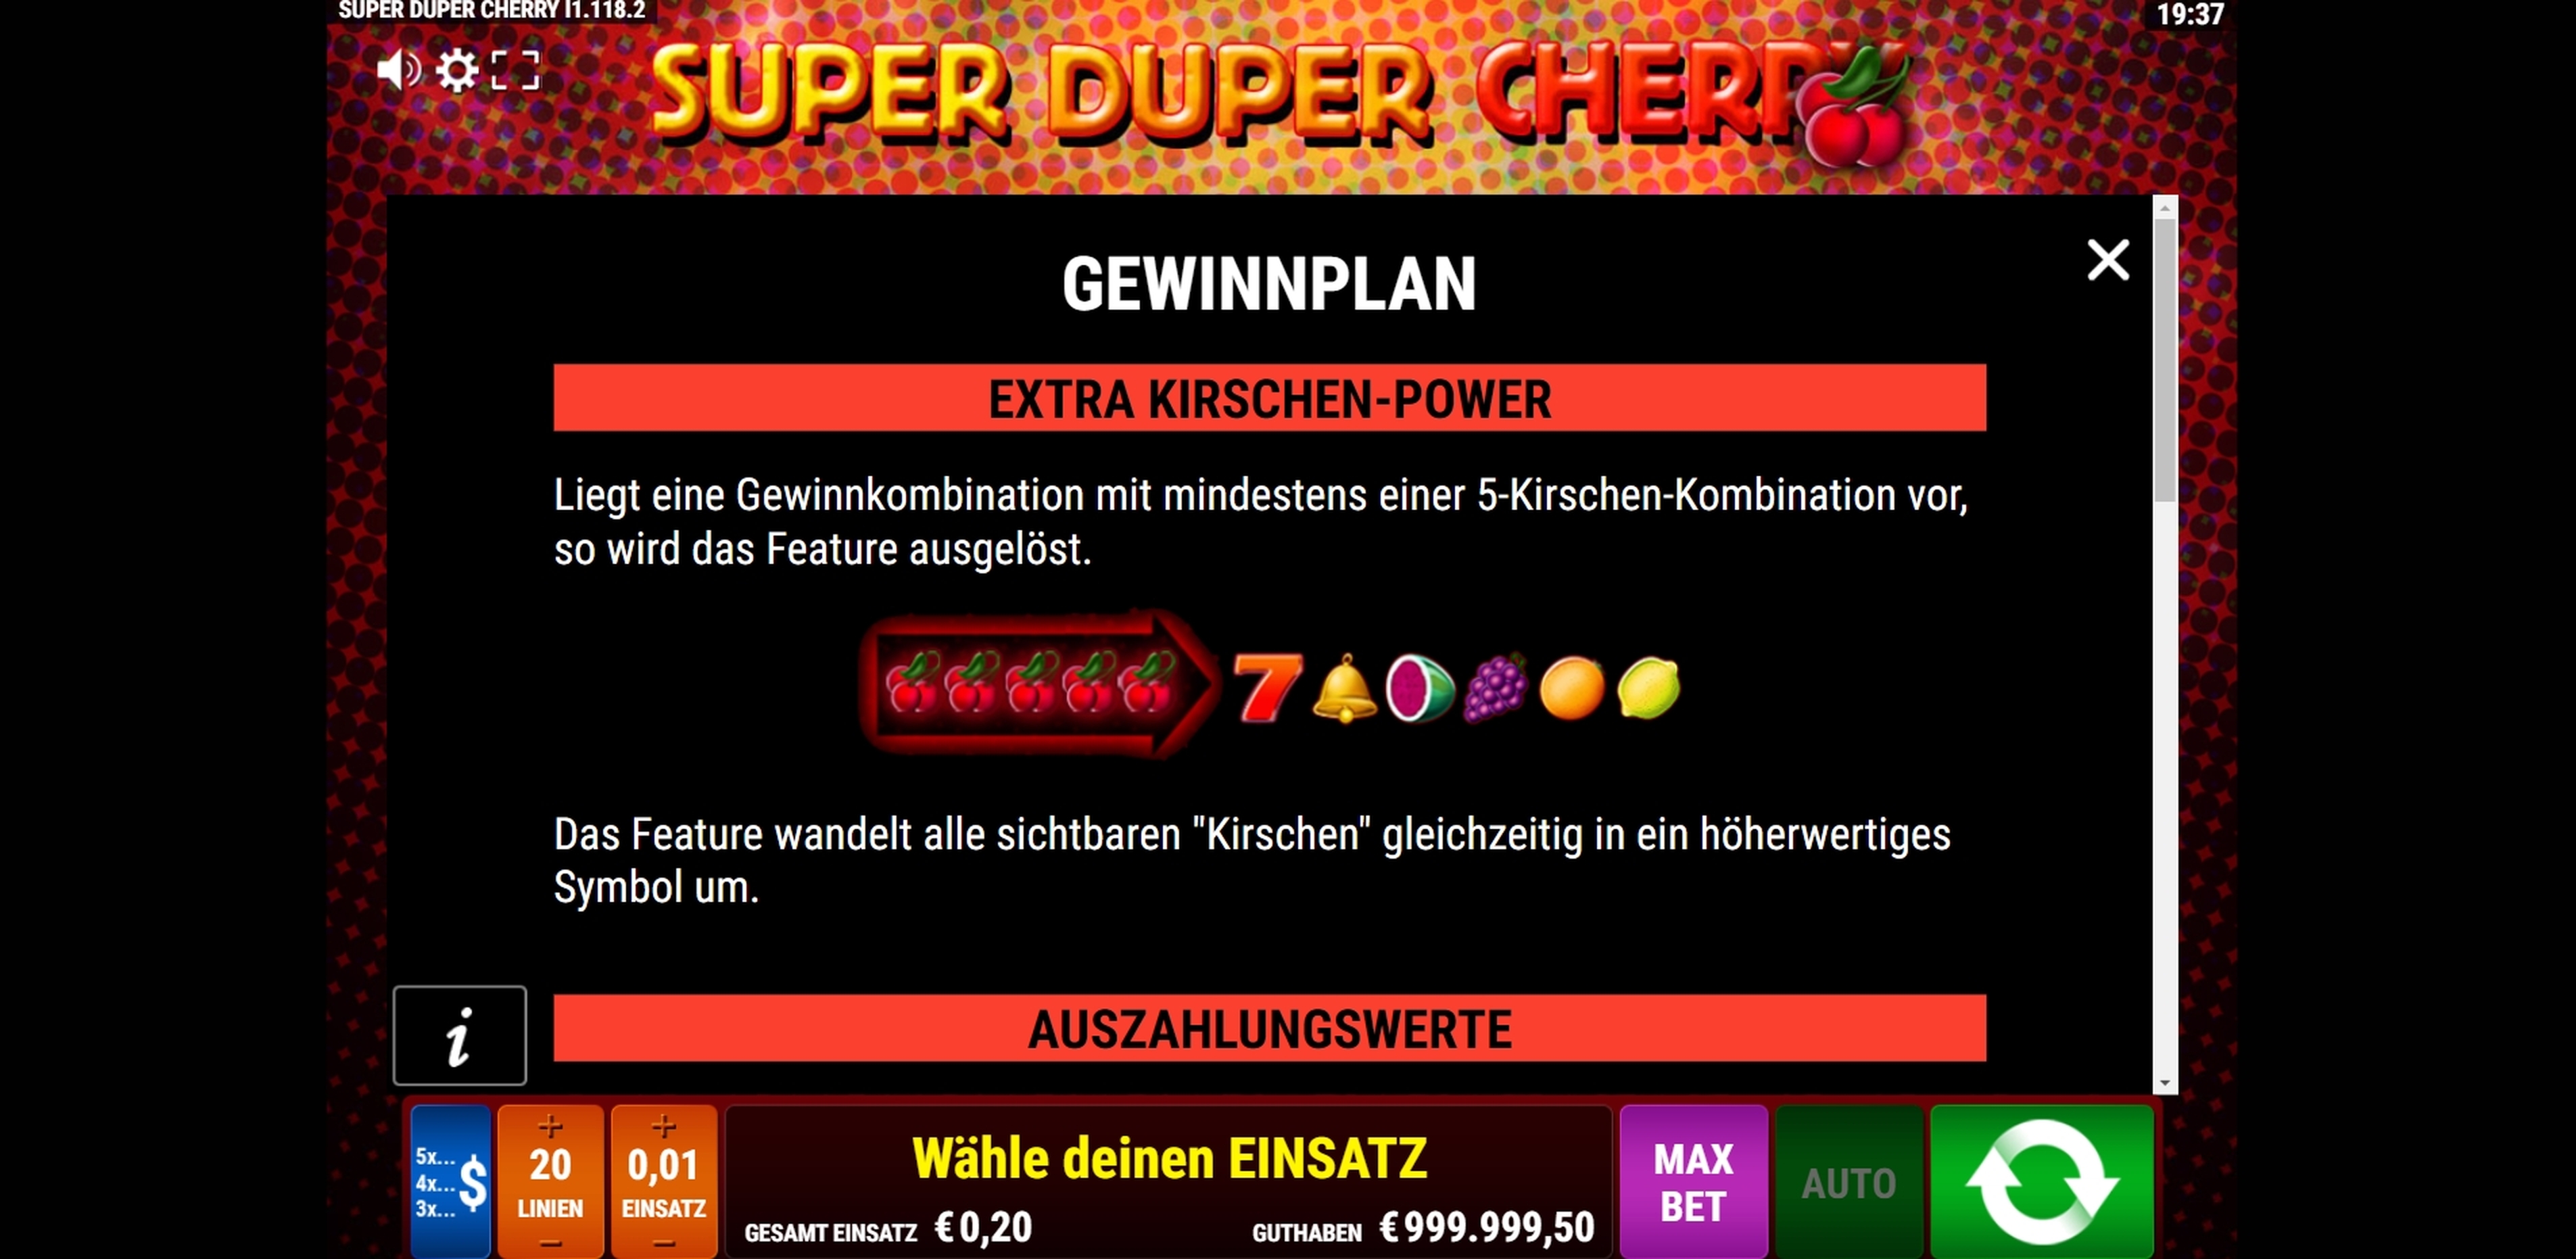 Info of Super Duper Cherry Slot Game by Gamomat